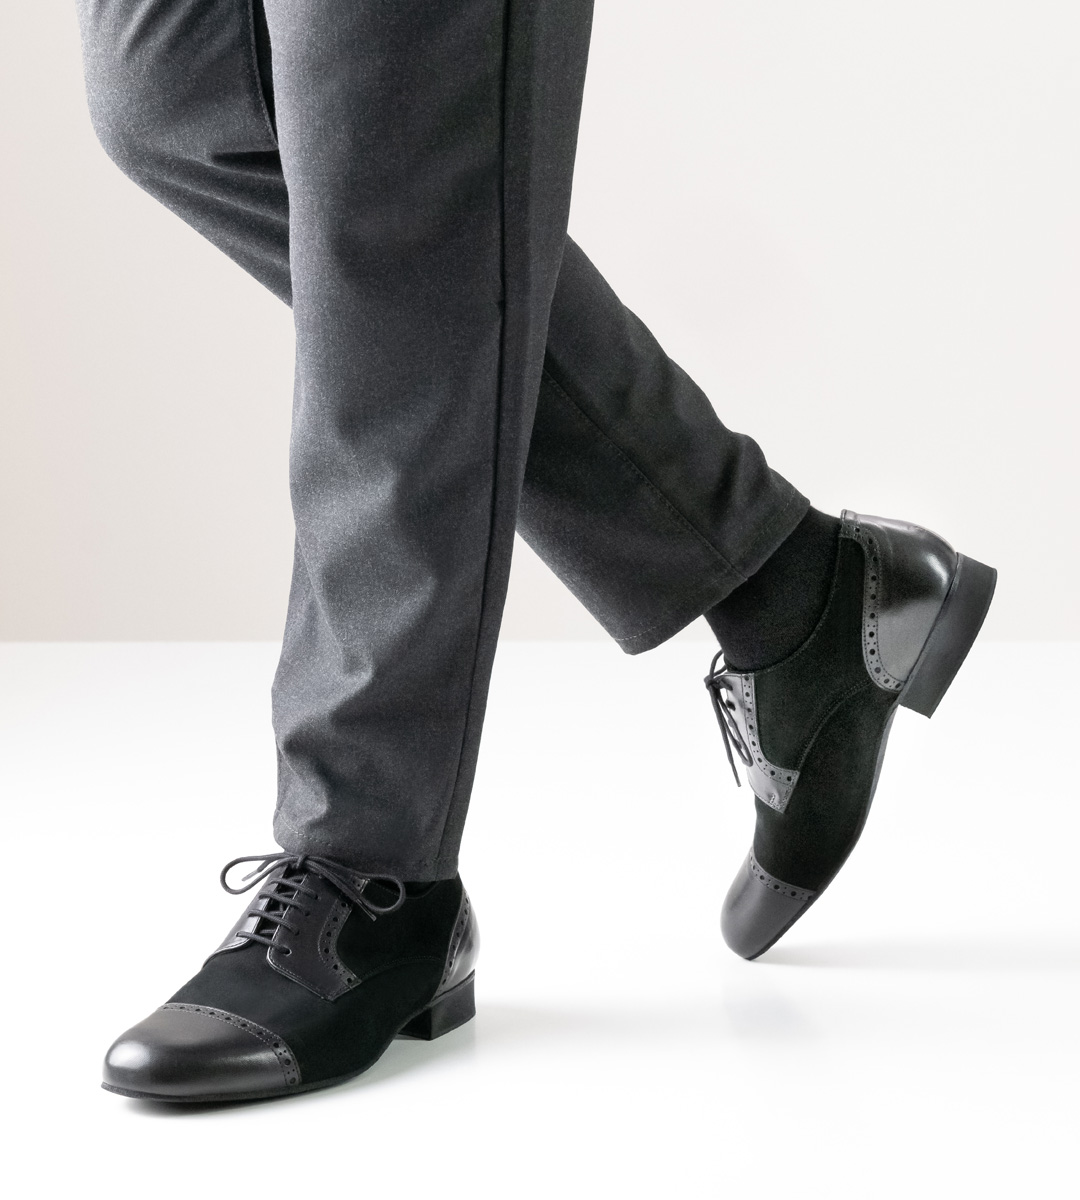 black men's dance shoe by Werner Kern in combination with black jeans